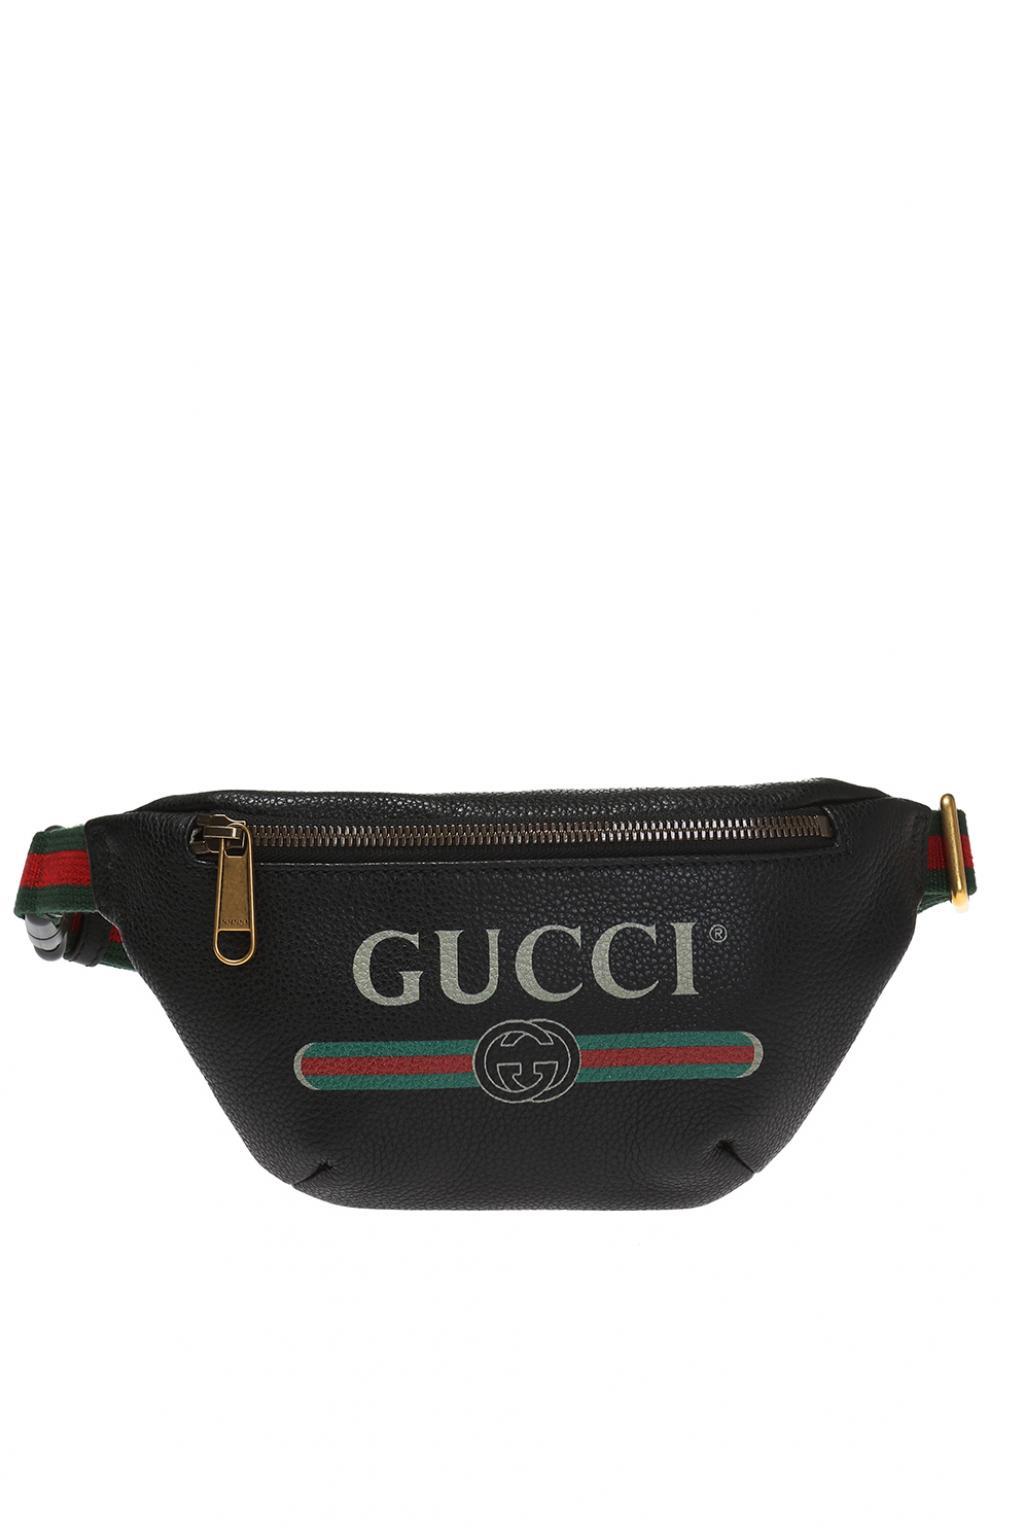 Gucci Leather Black Small Logo Belt Bag for Men - Save 18% - Lyst